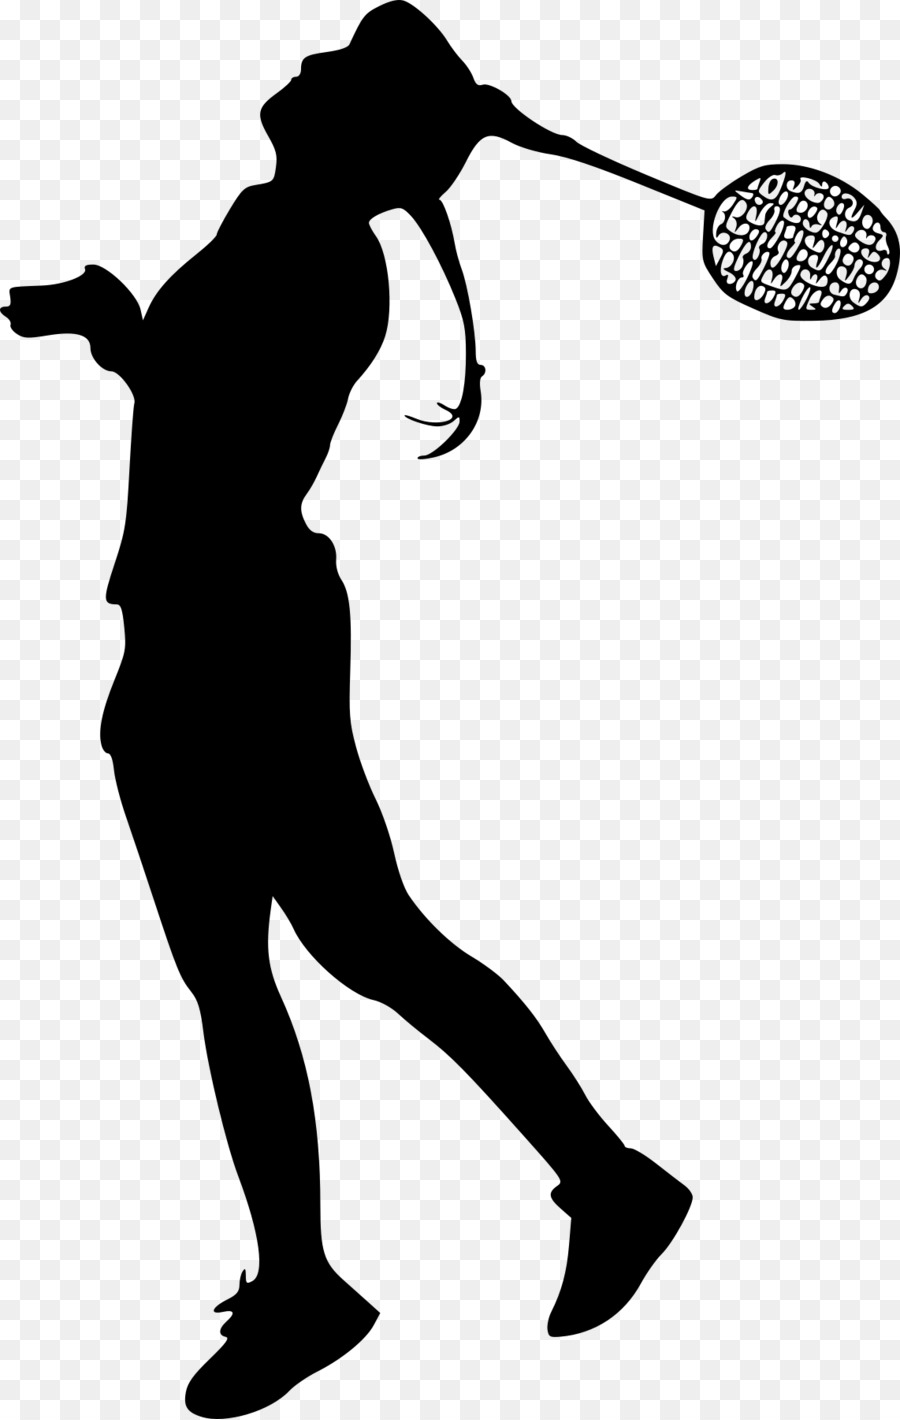 Badminton background clipart.